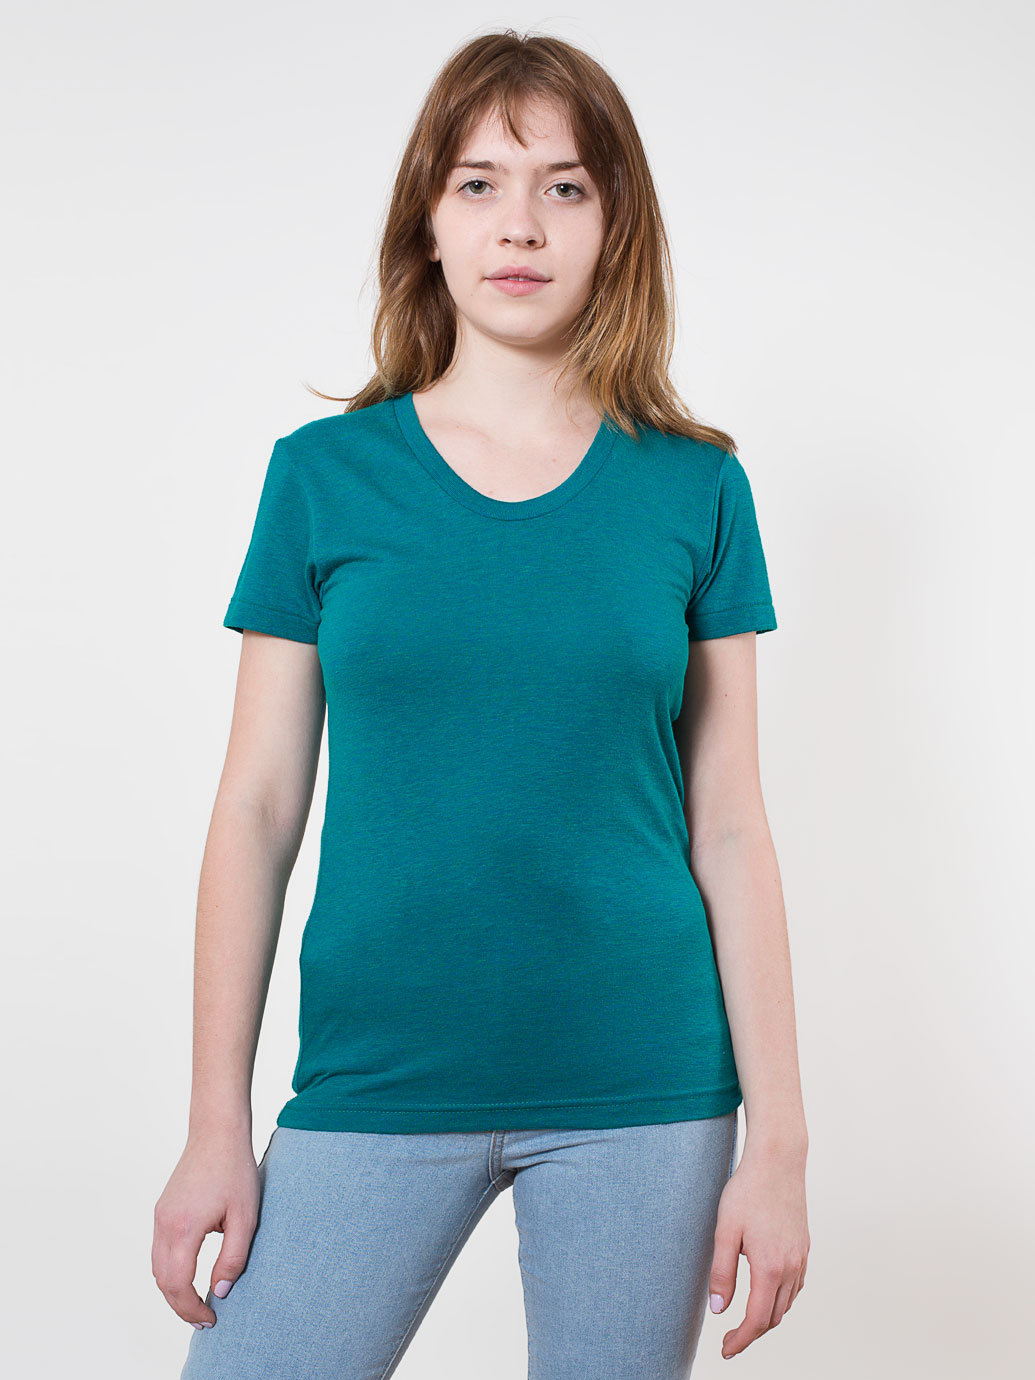 American Apparel Women's Tri-Blend Crew Neck T-shirt